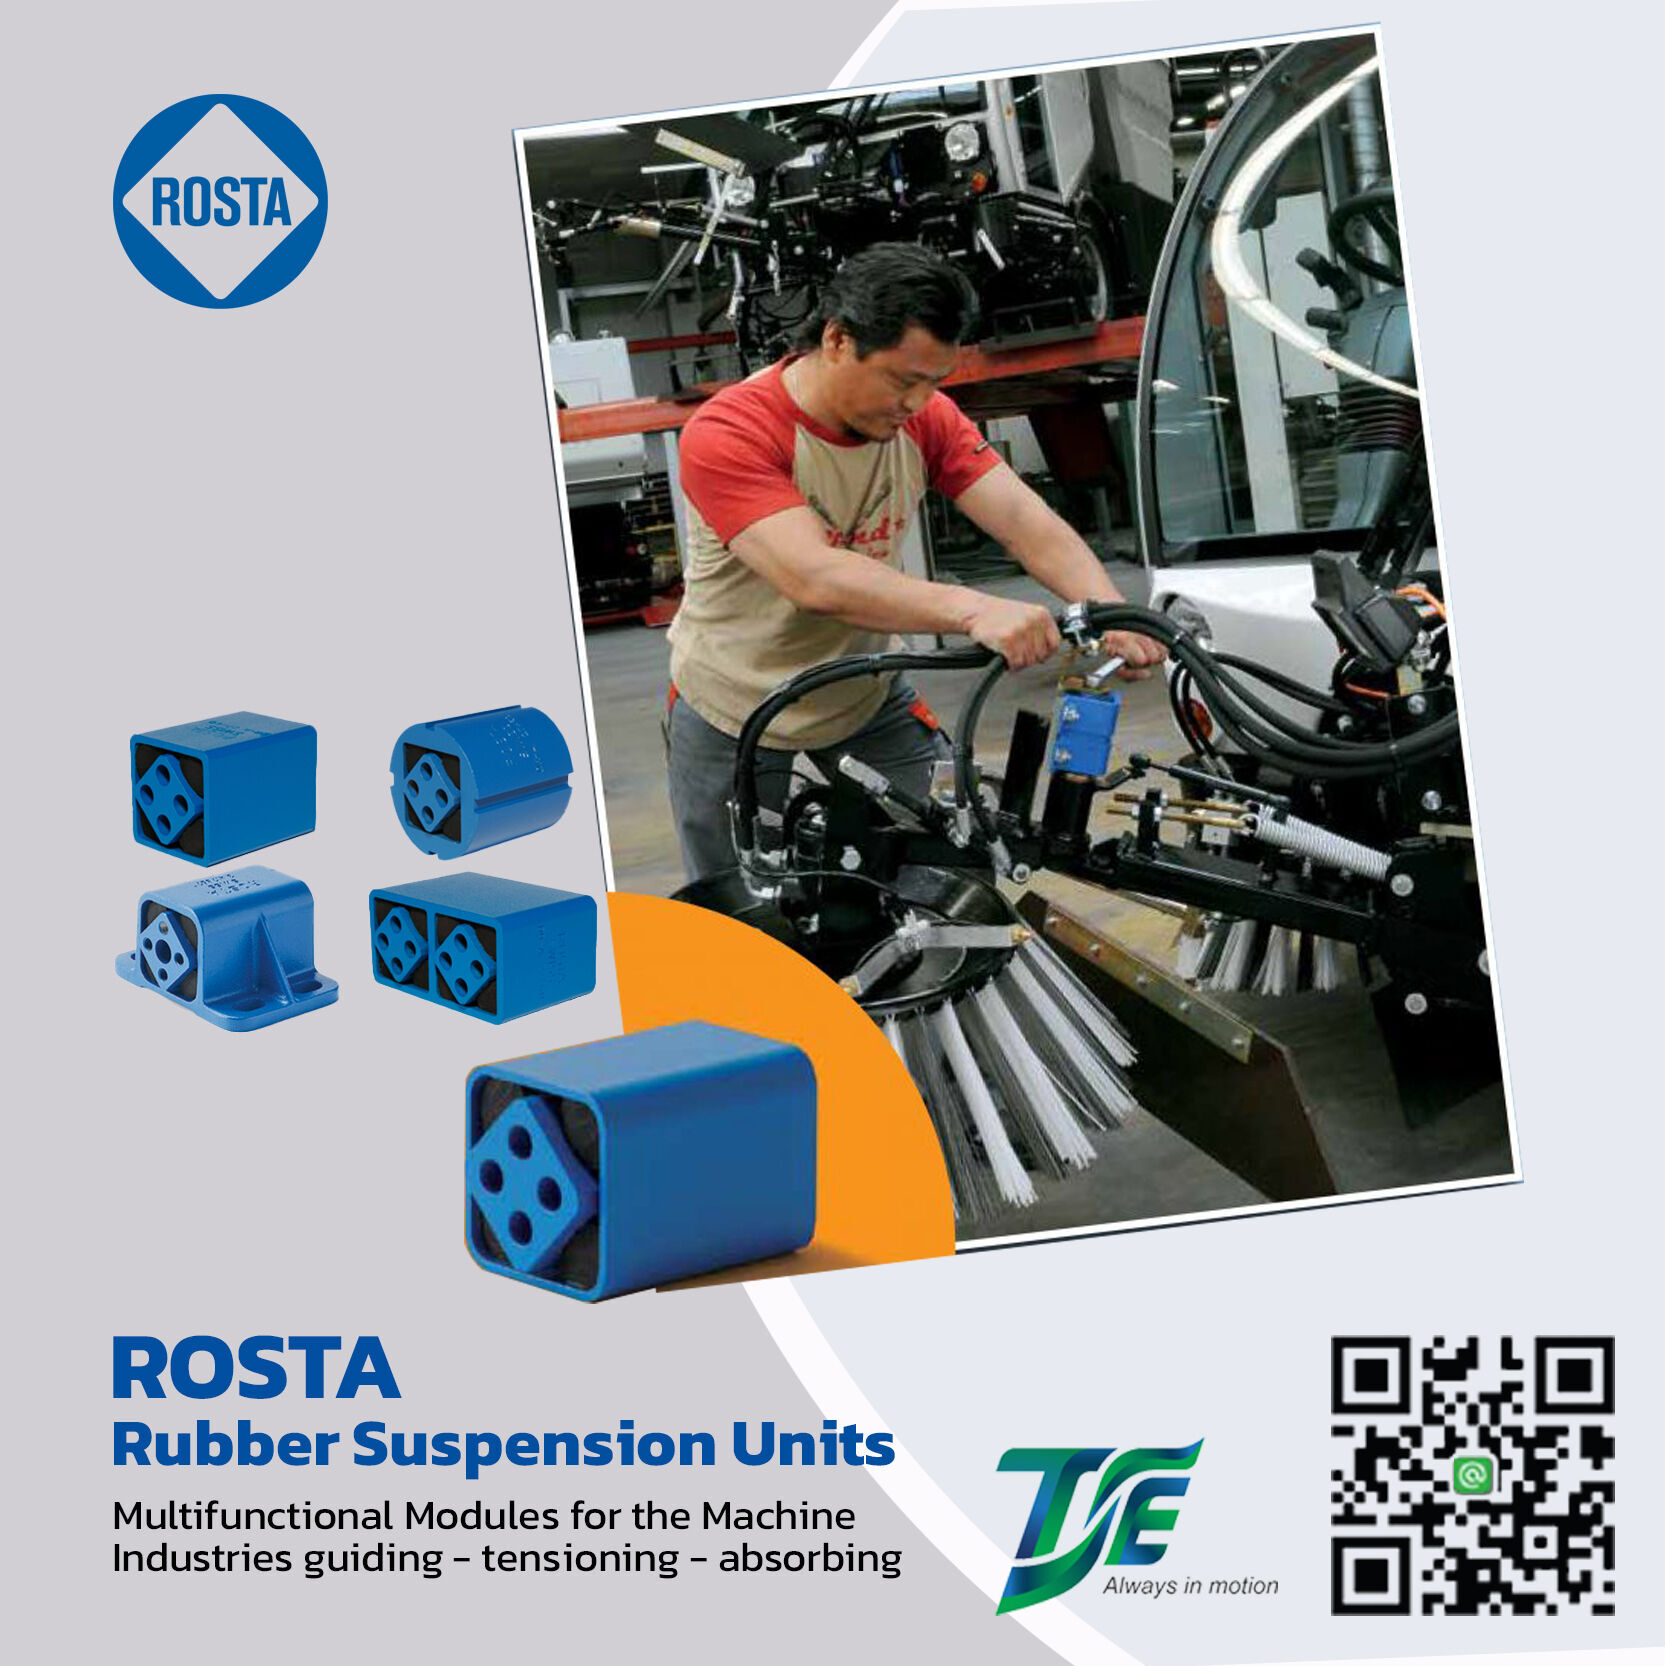 Rosta
Rubber Suspension Units